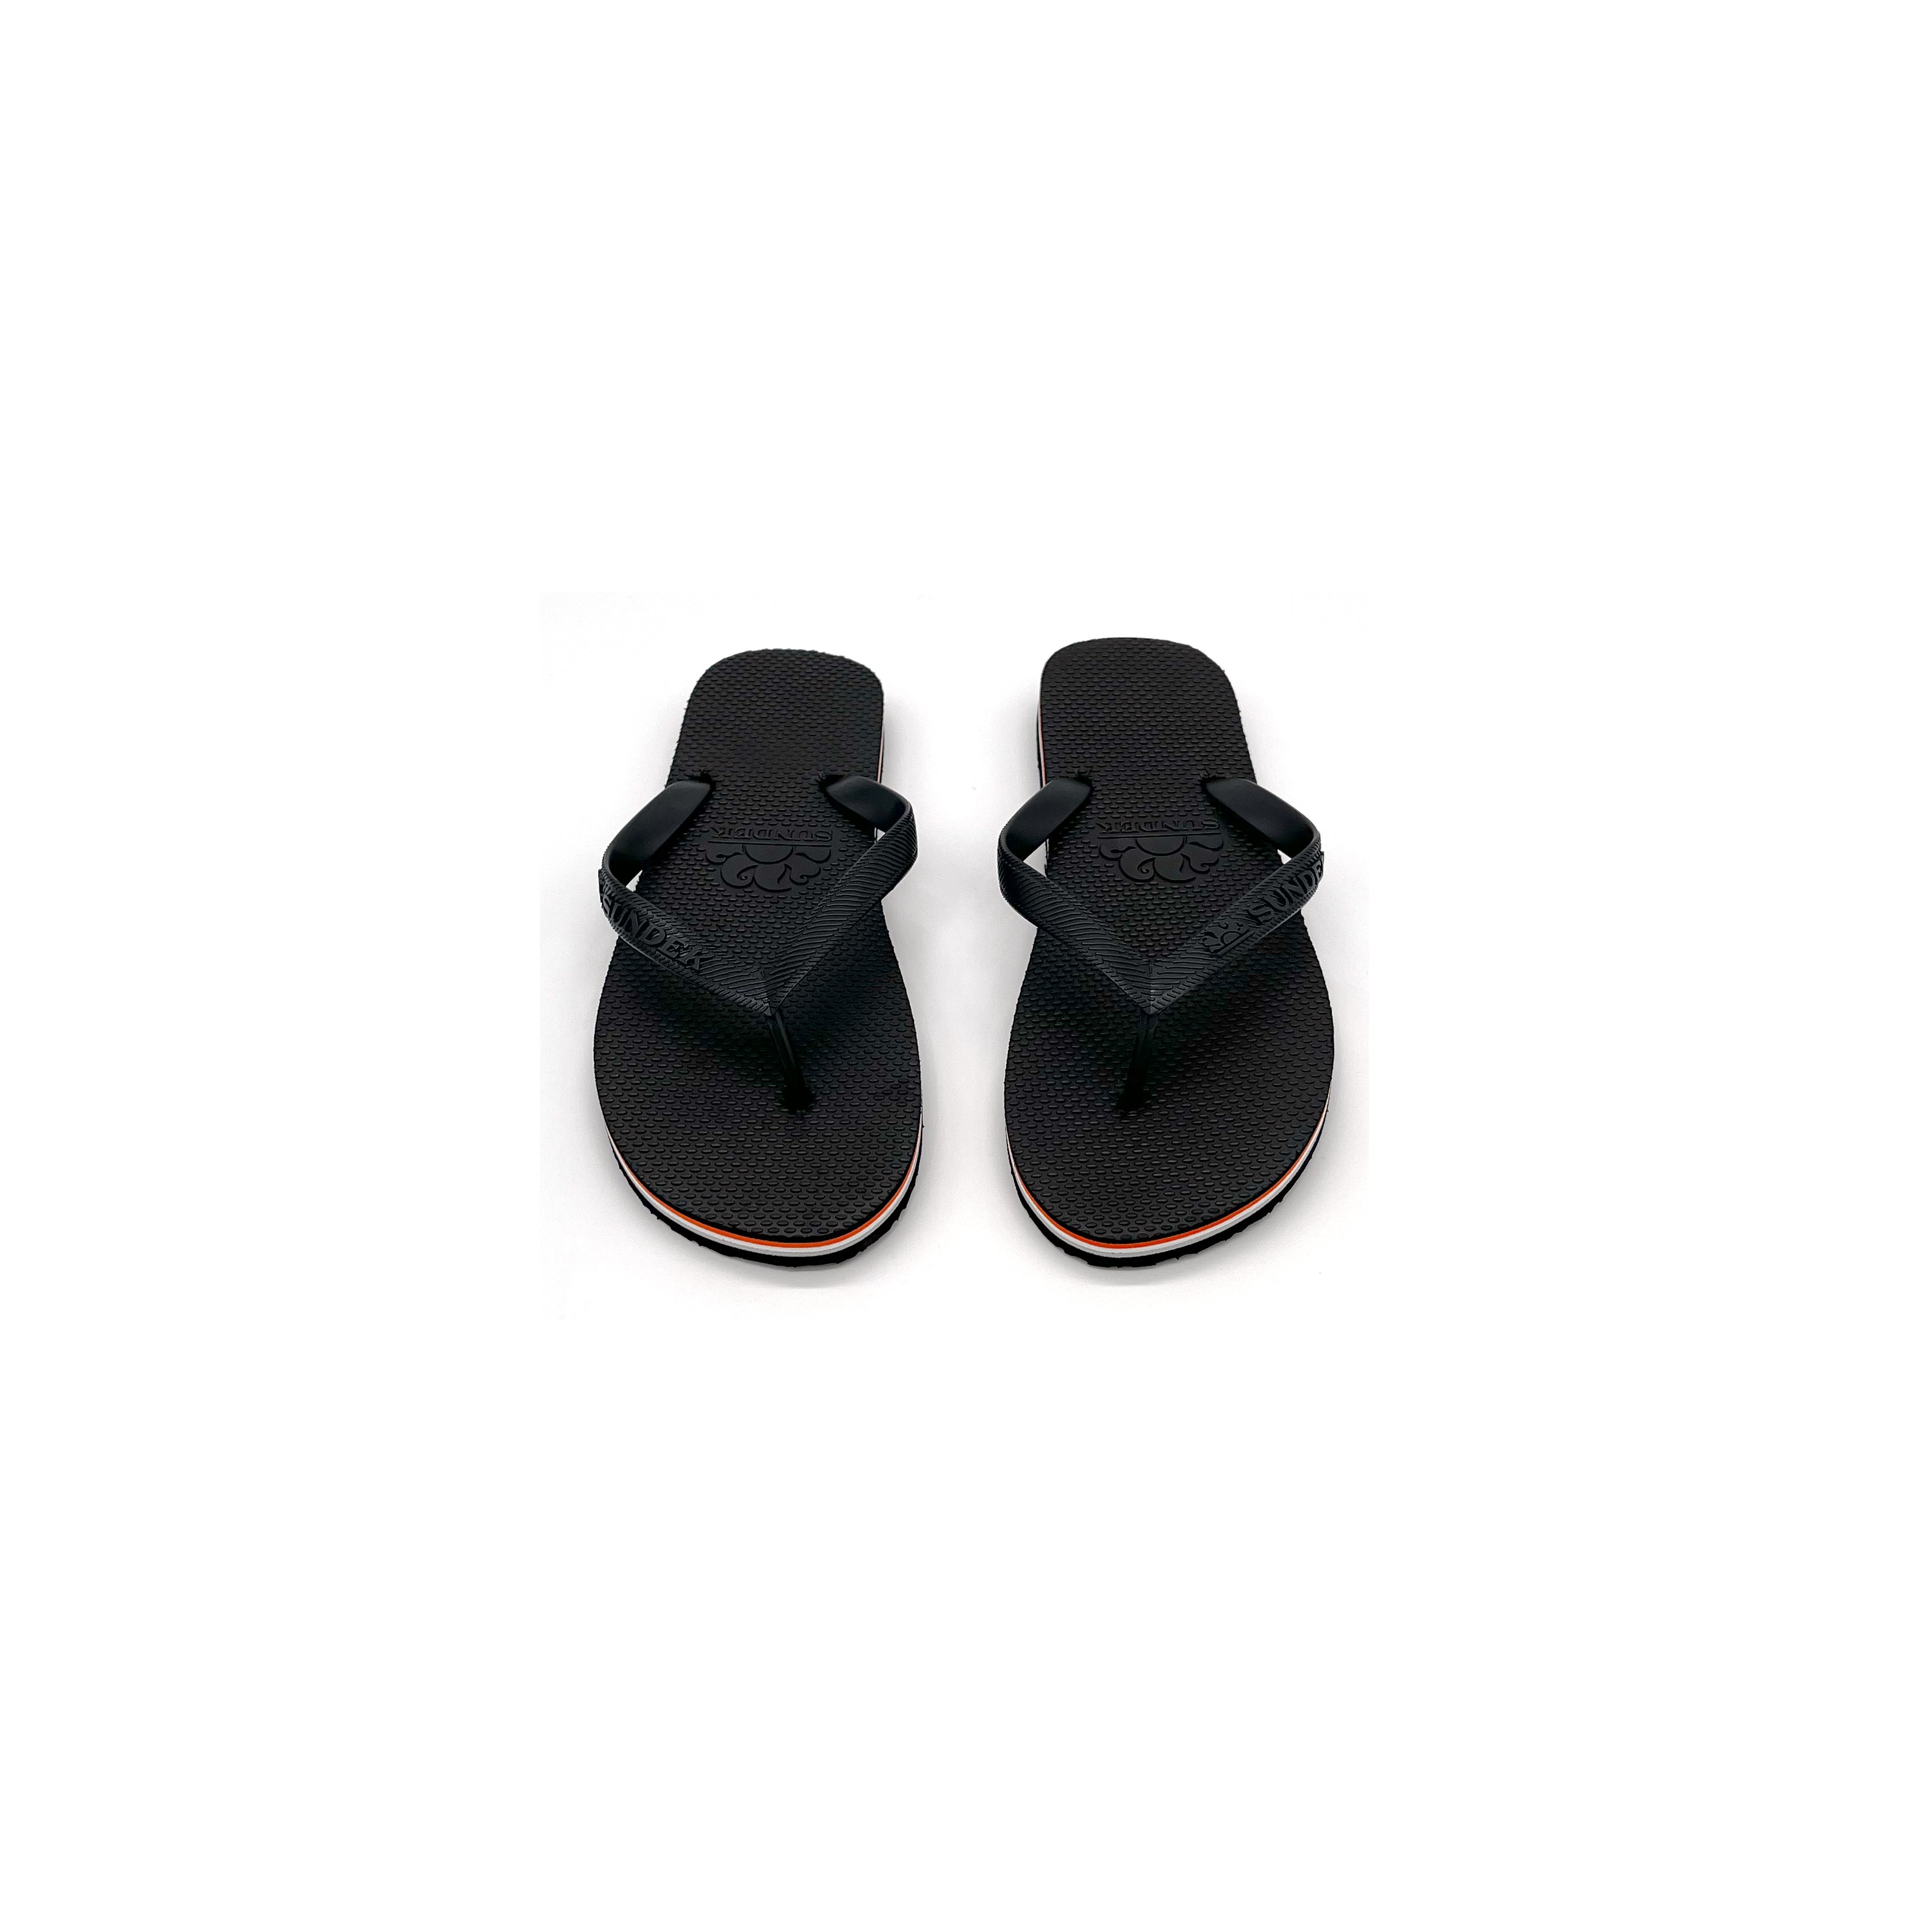 Timberland Flip Flop Sandals for Men | Mercari